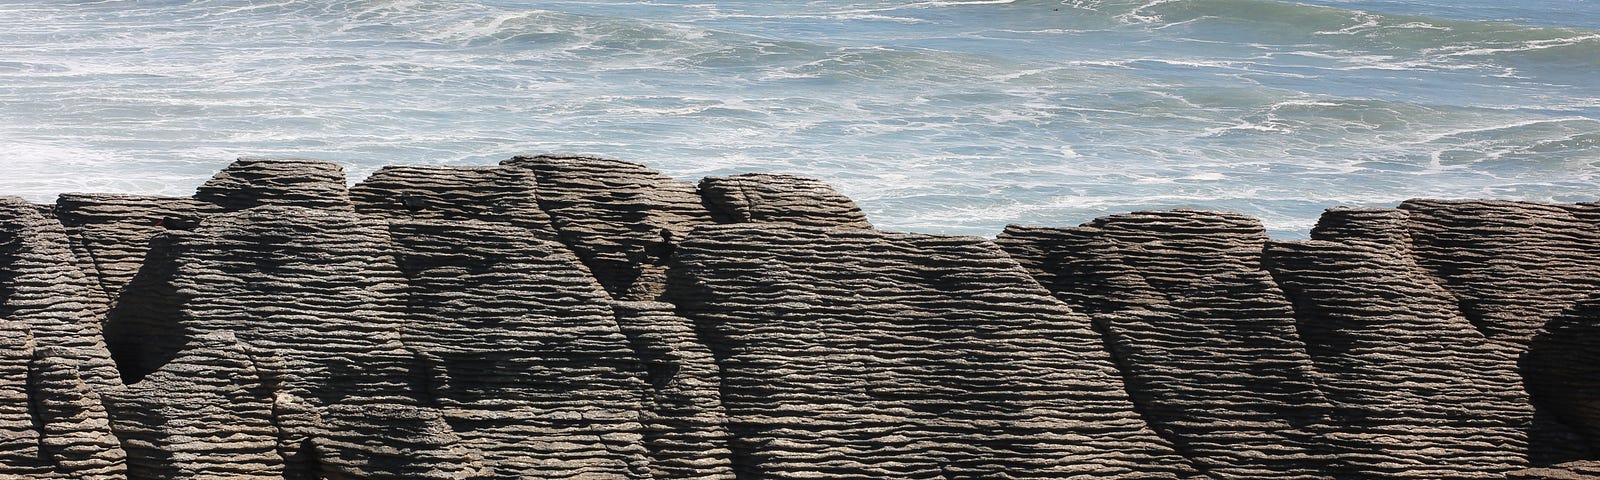 Horizontal rock layers that look like piles of pancakes along a coast line